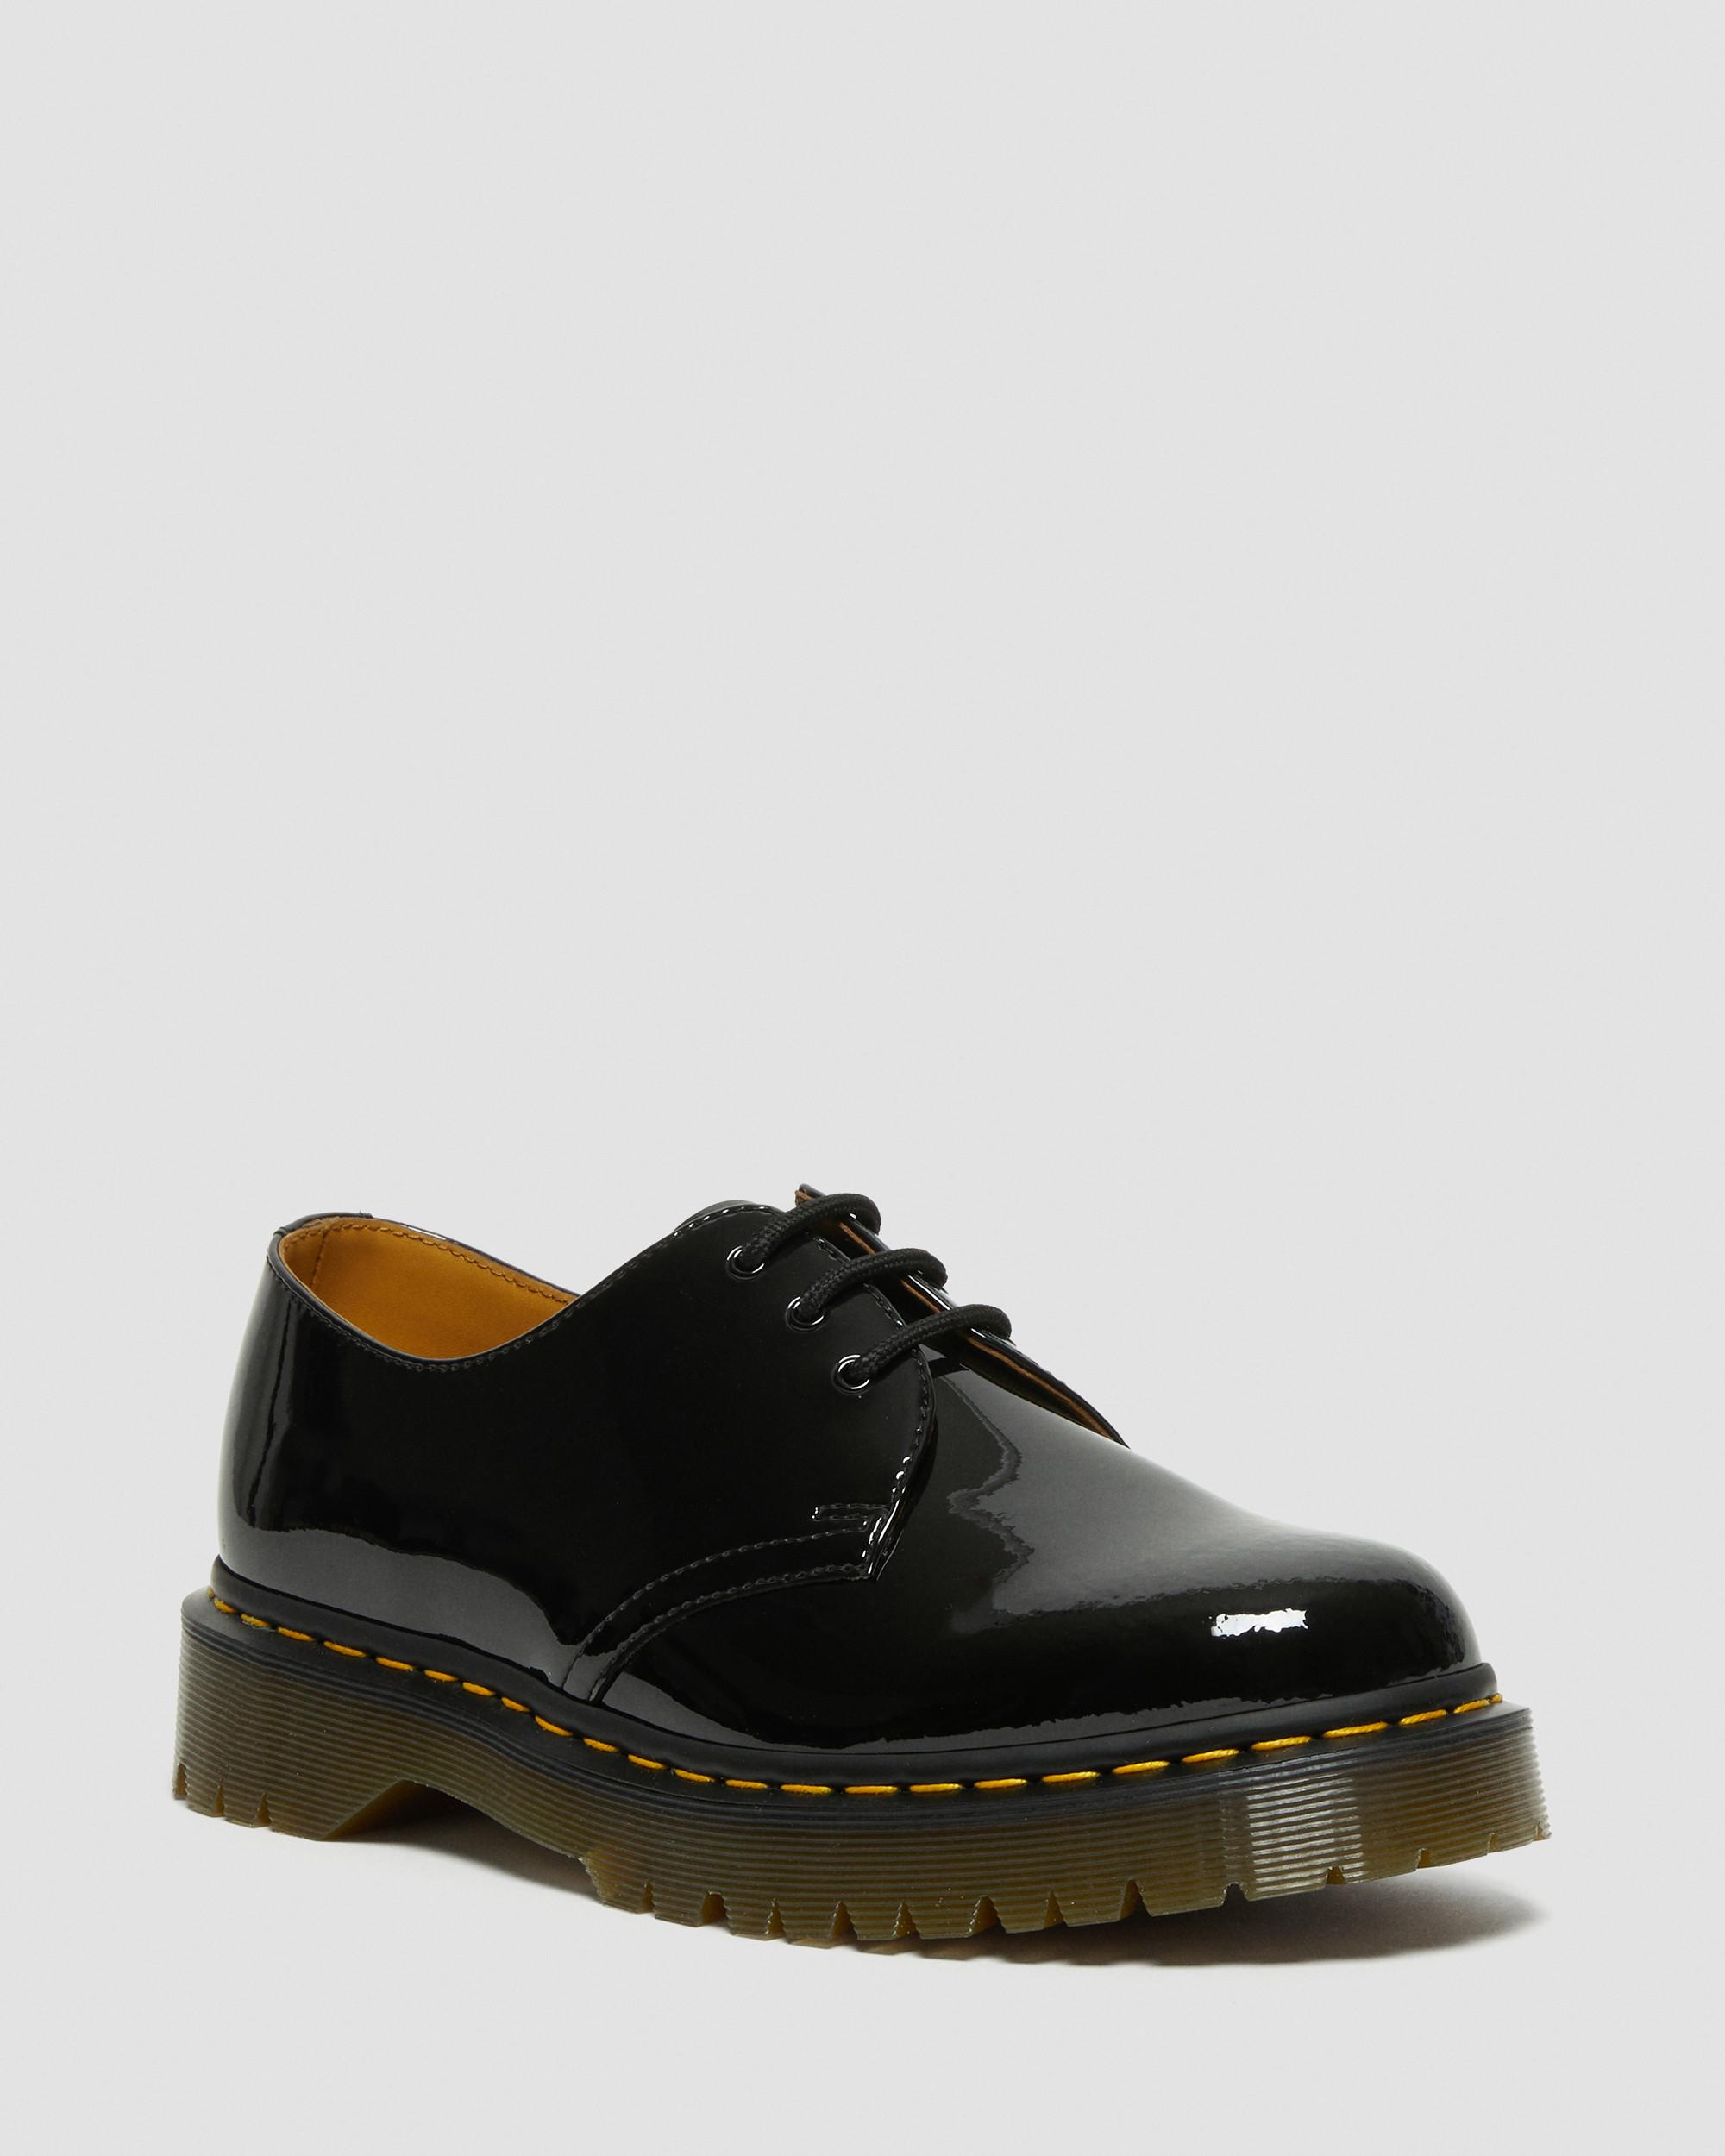 1461 Bex Patent Leather Oxford Shoes, Black | Dr. Martens